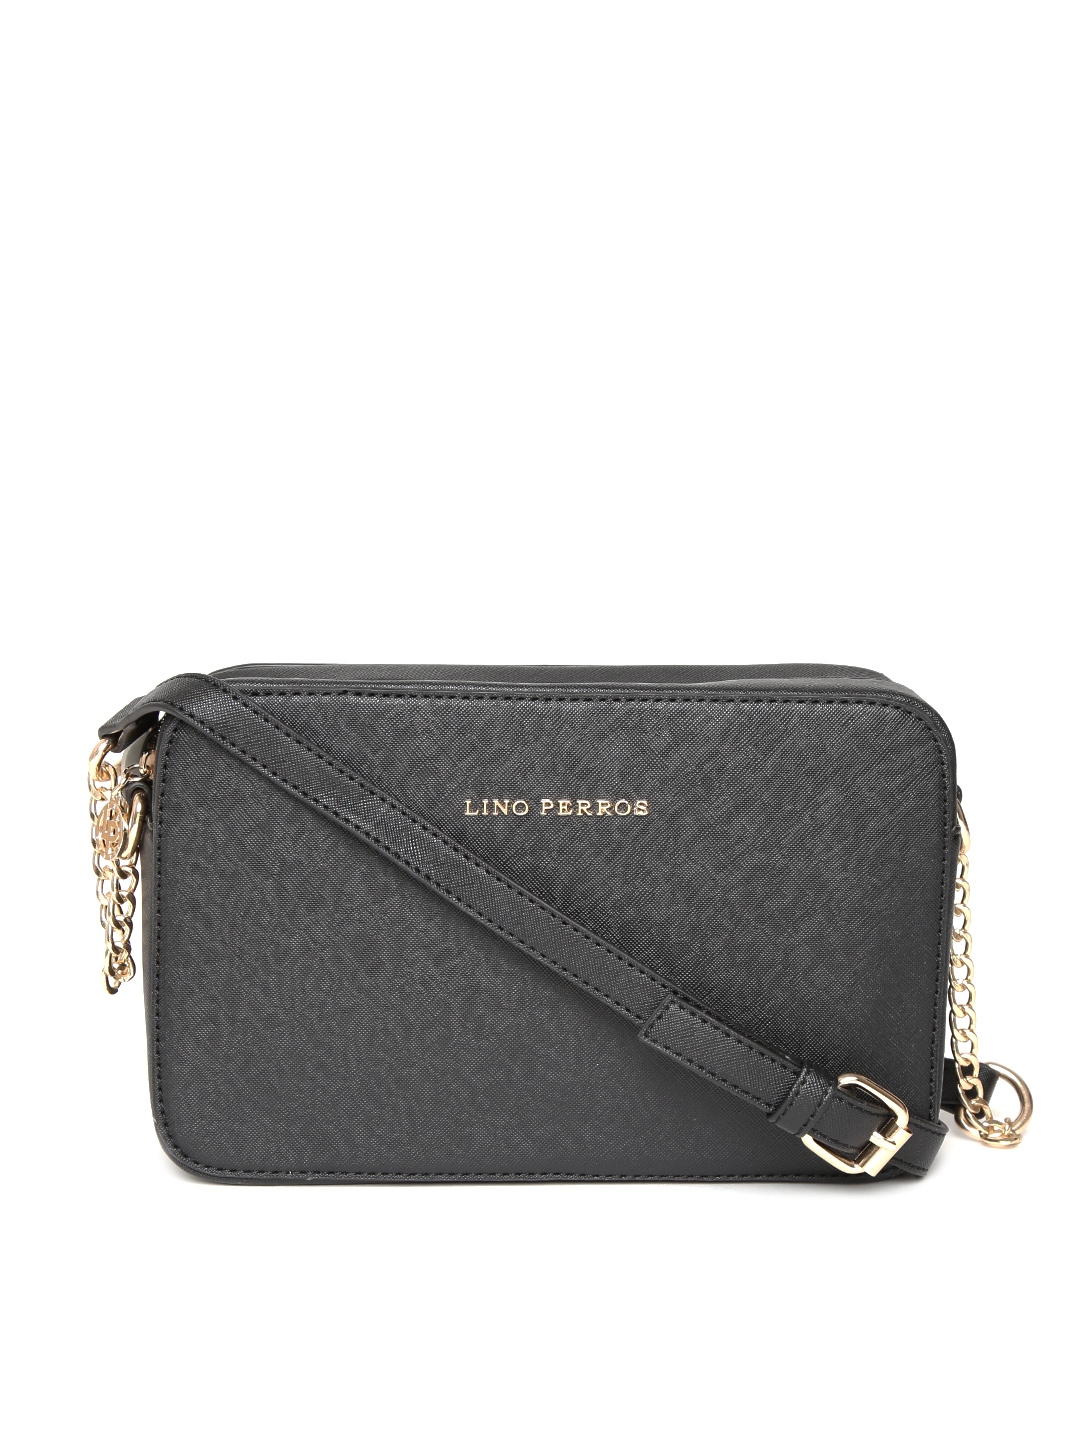 Buy Lino Perros Black Sling Bag - Handbags for Women 1851458 | Myntra